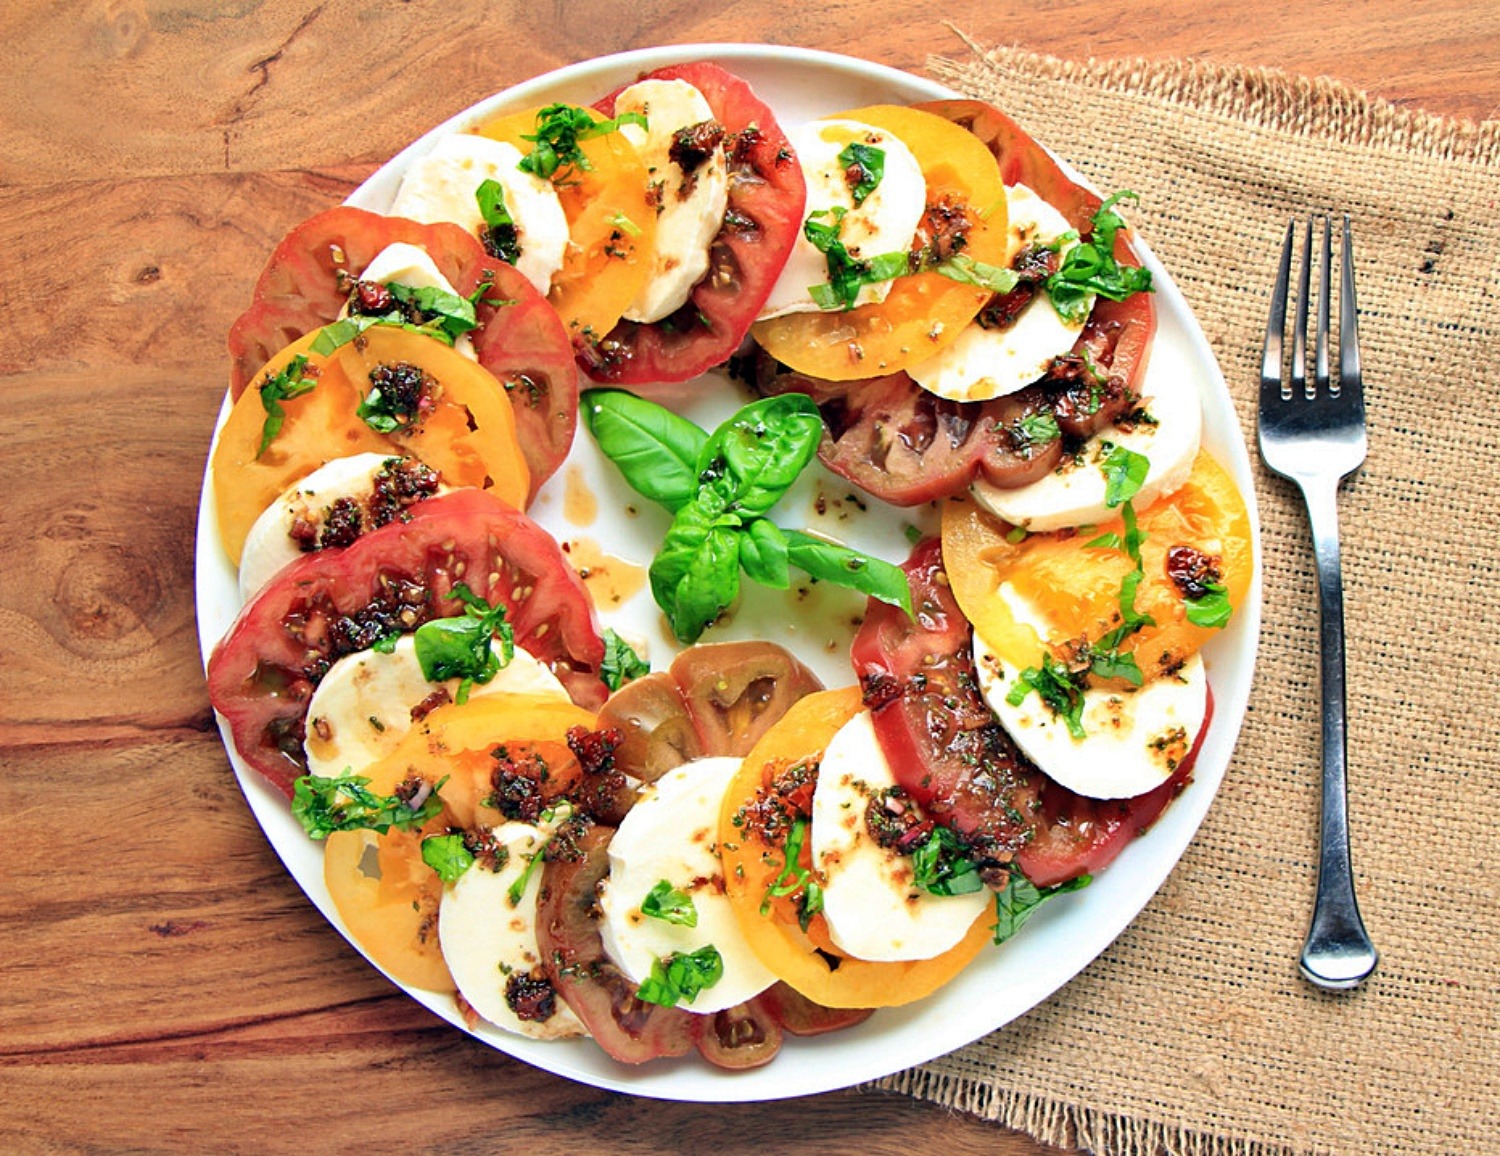 Heirloom tomato and mozzarella salad